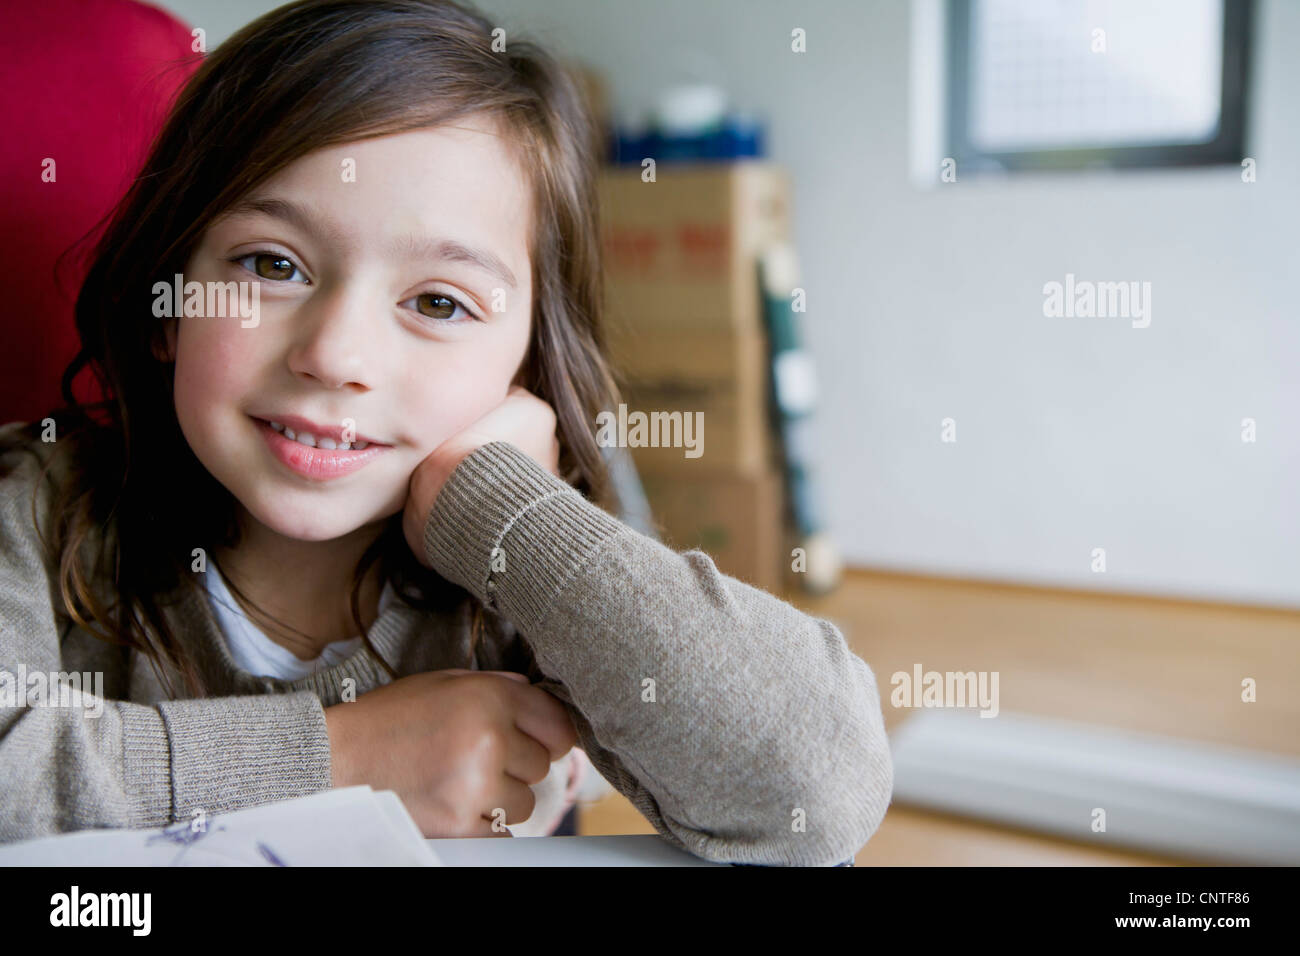 Smiling girl sitting at desk Stock Photo